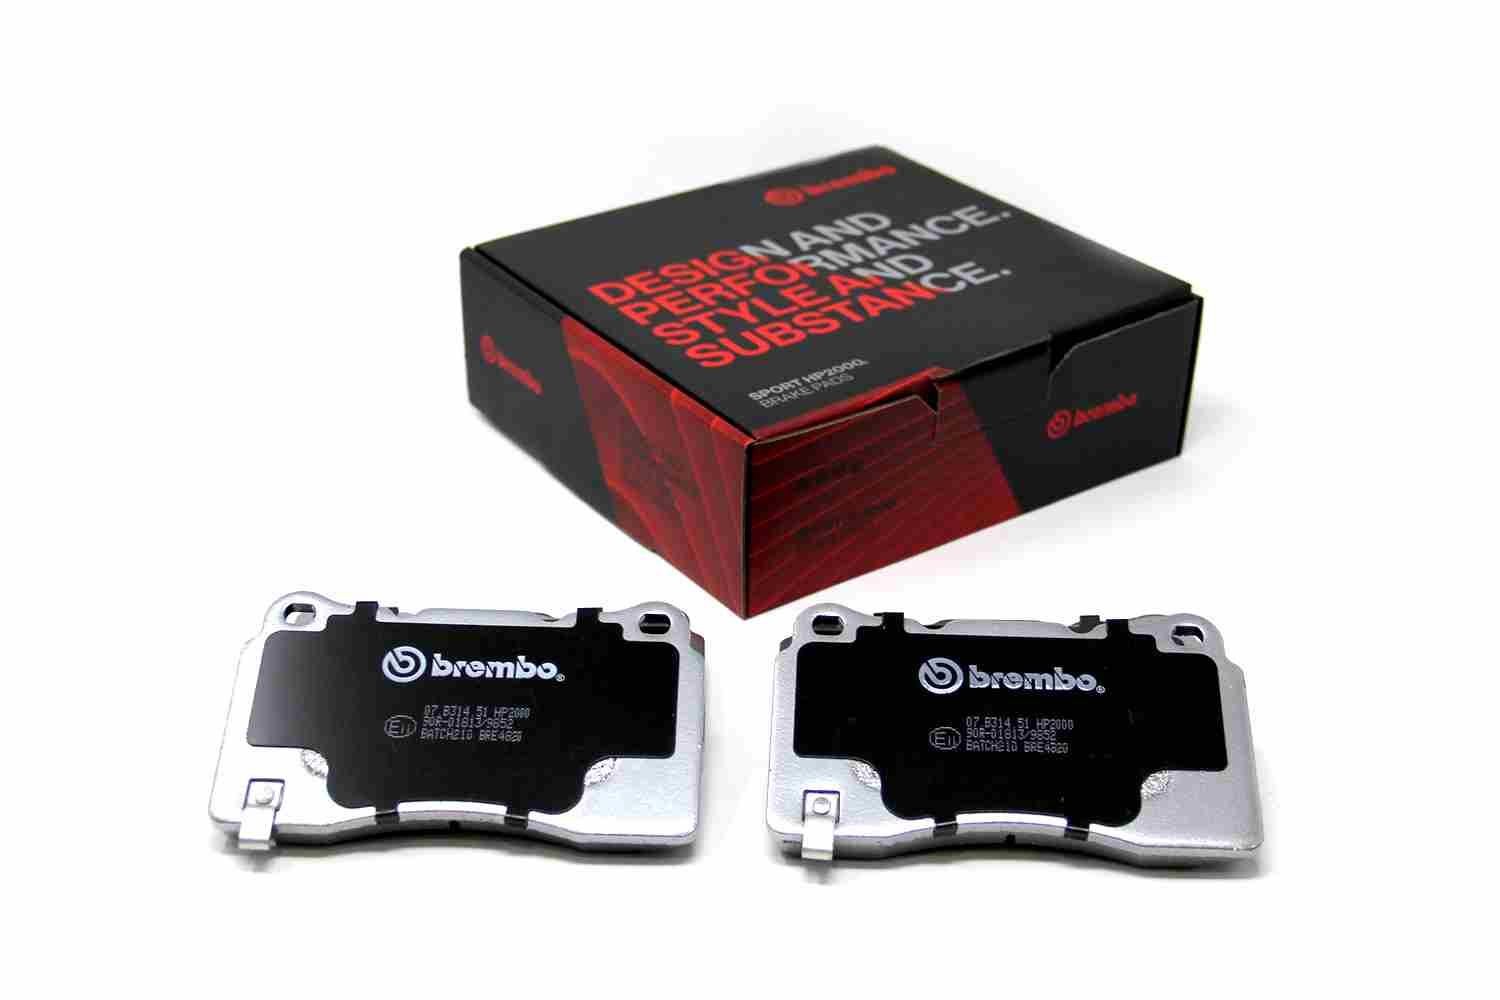 BREMBO High performance brake pad Focus Mk2 Box Body / Estate new 07.B314.51